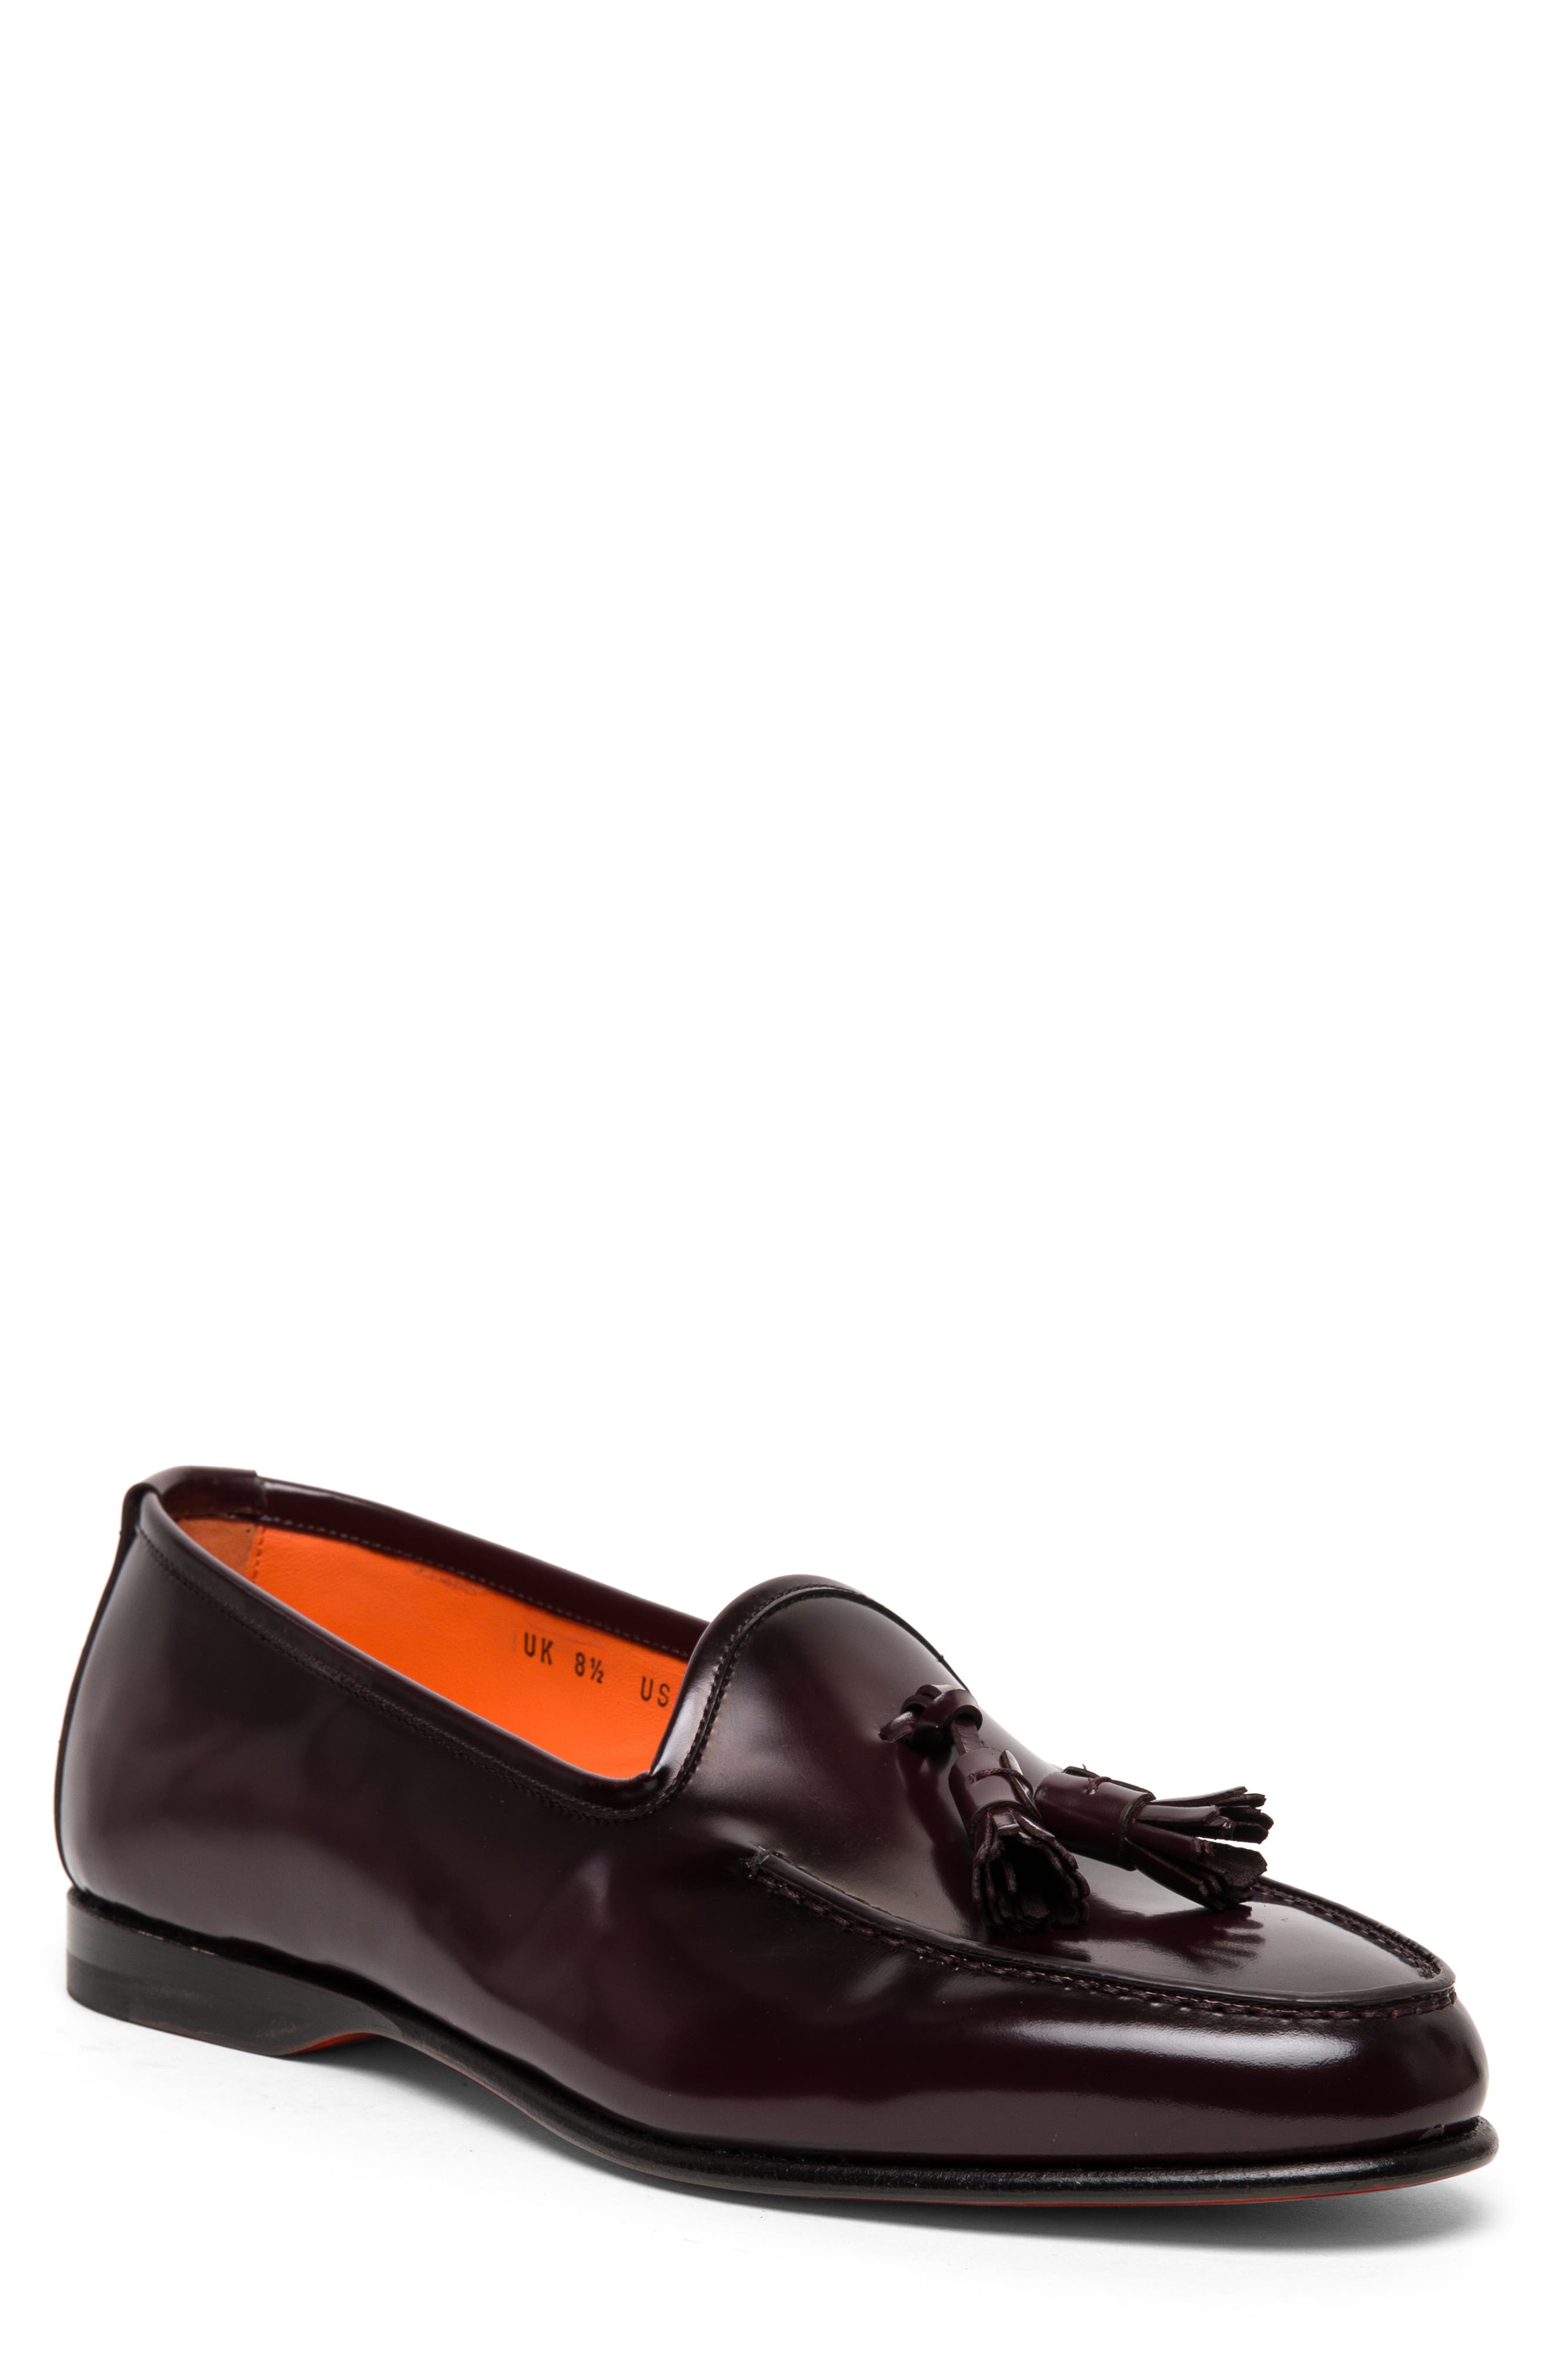 Santoni high-shine leather loafers - Black